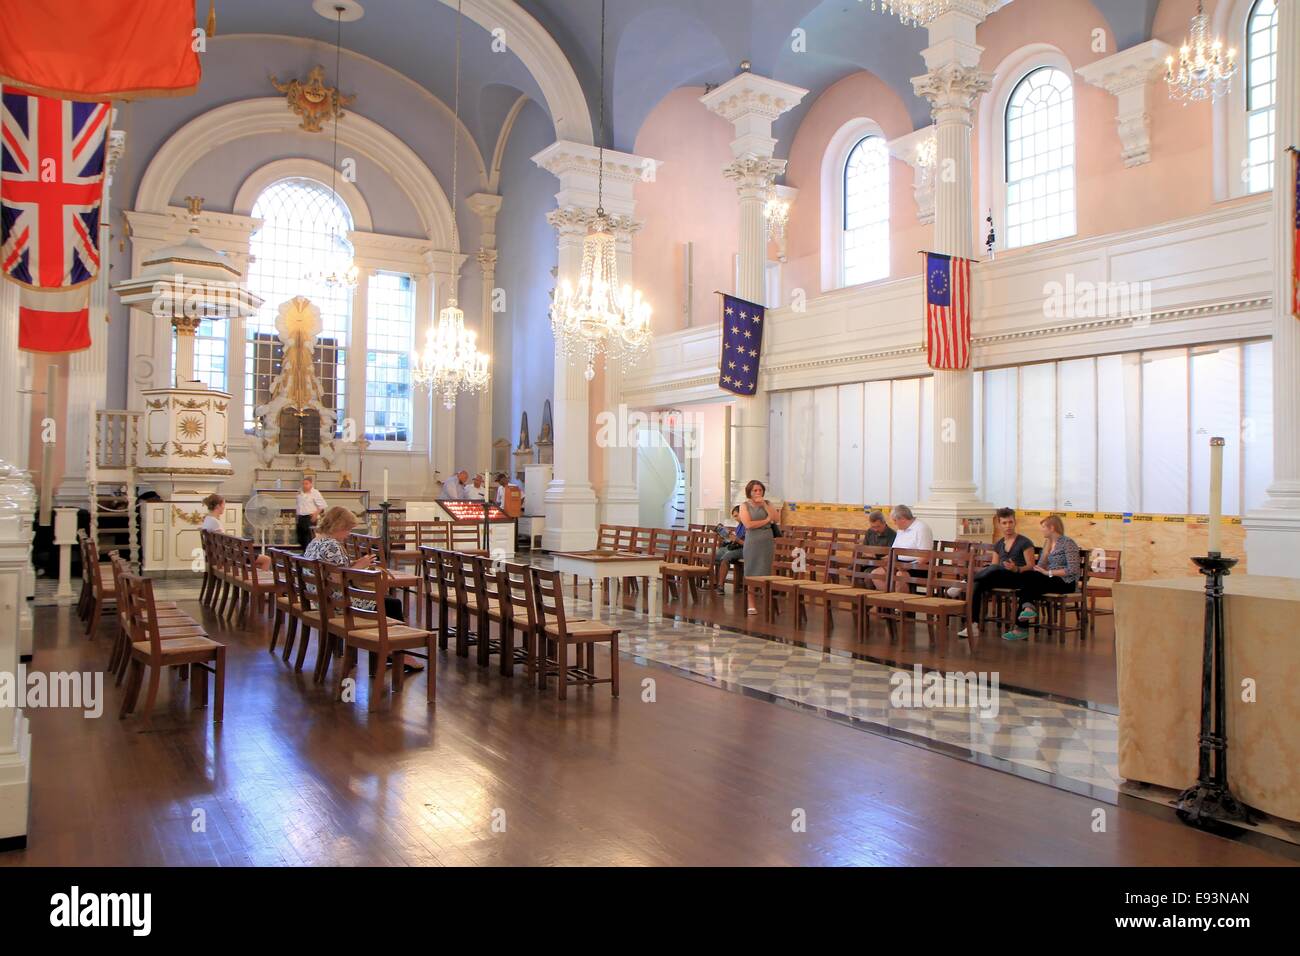 Interior view of Saint Paul's Chapel, Lower Manhattan, New York City, USA Stock Photo